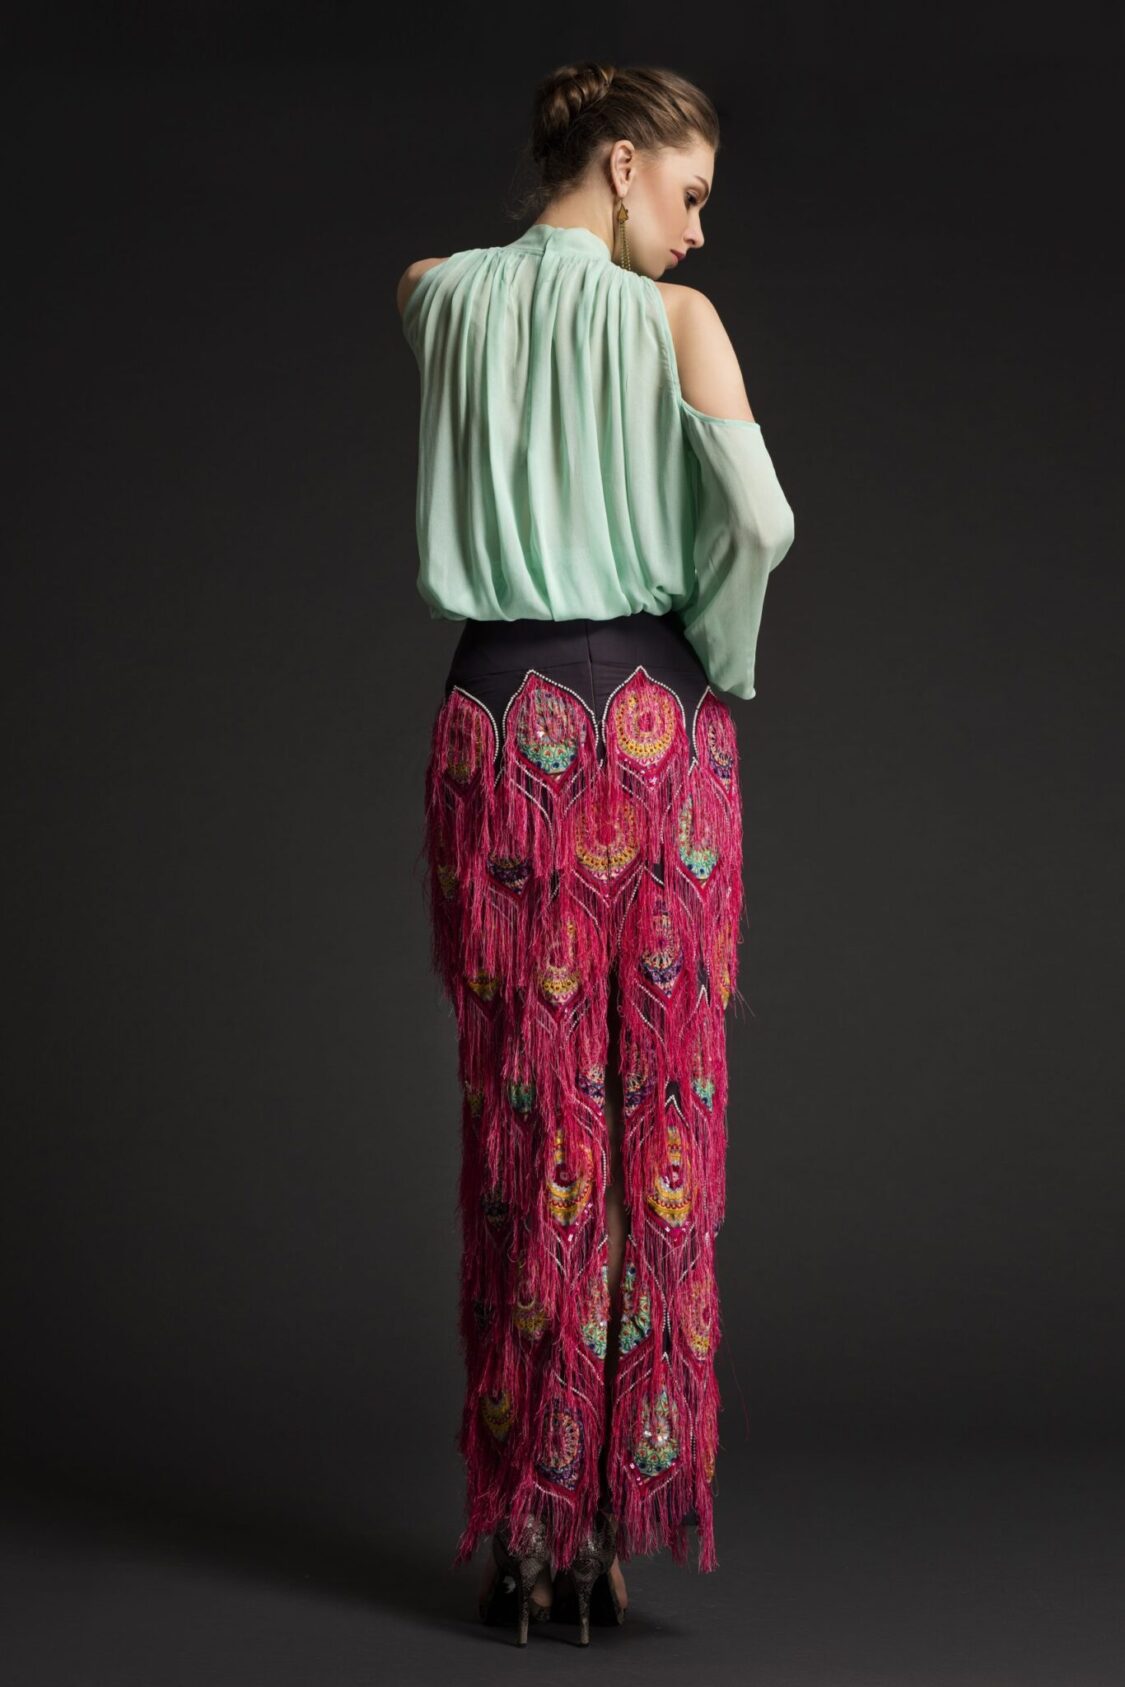 Fuchsia Fringe Midi Skirt with Cold Shoulder Blouse